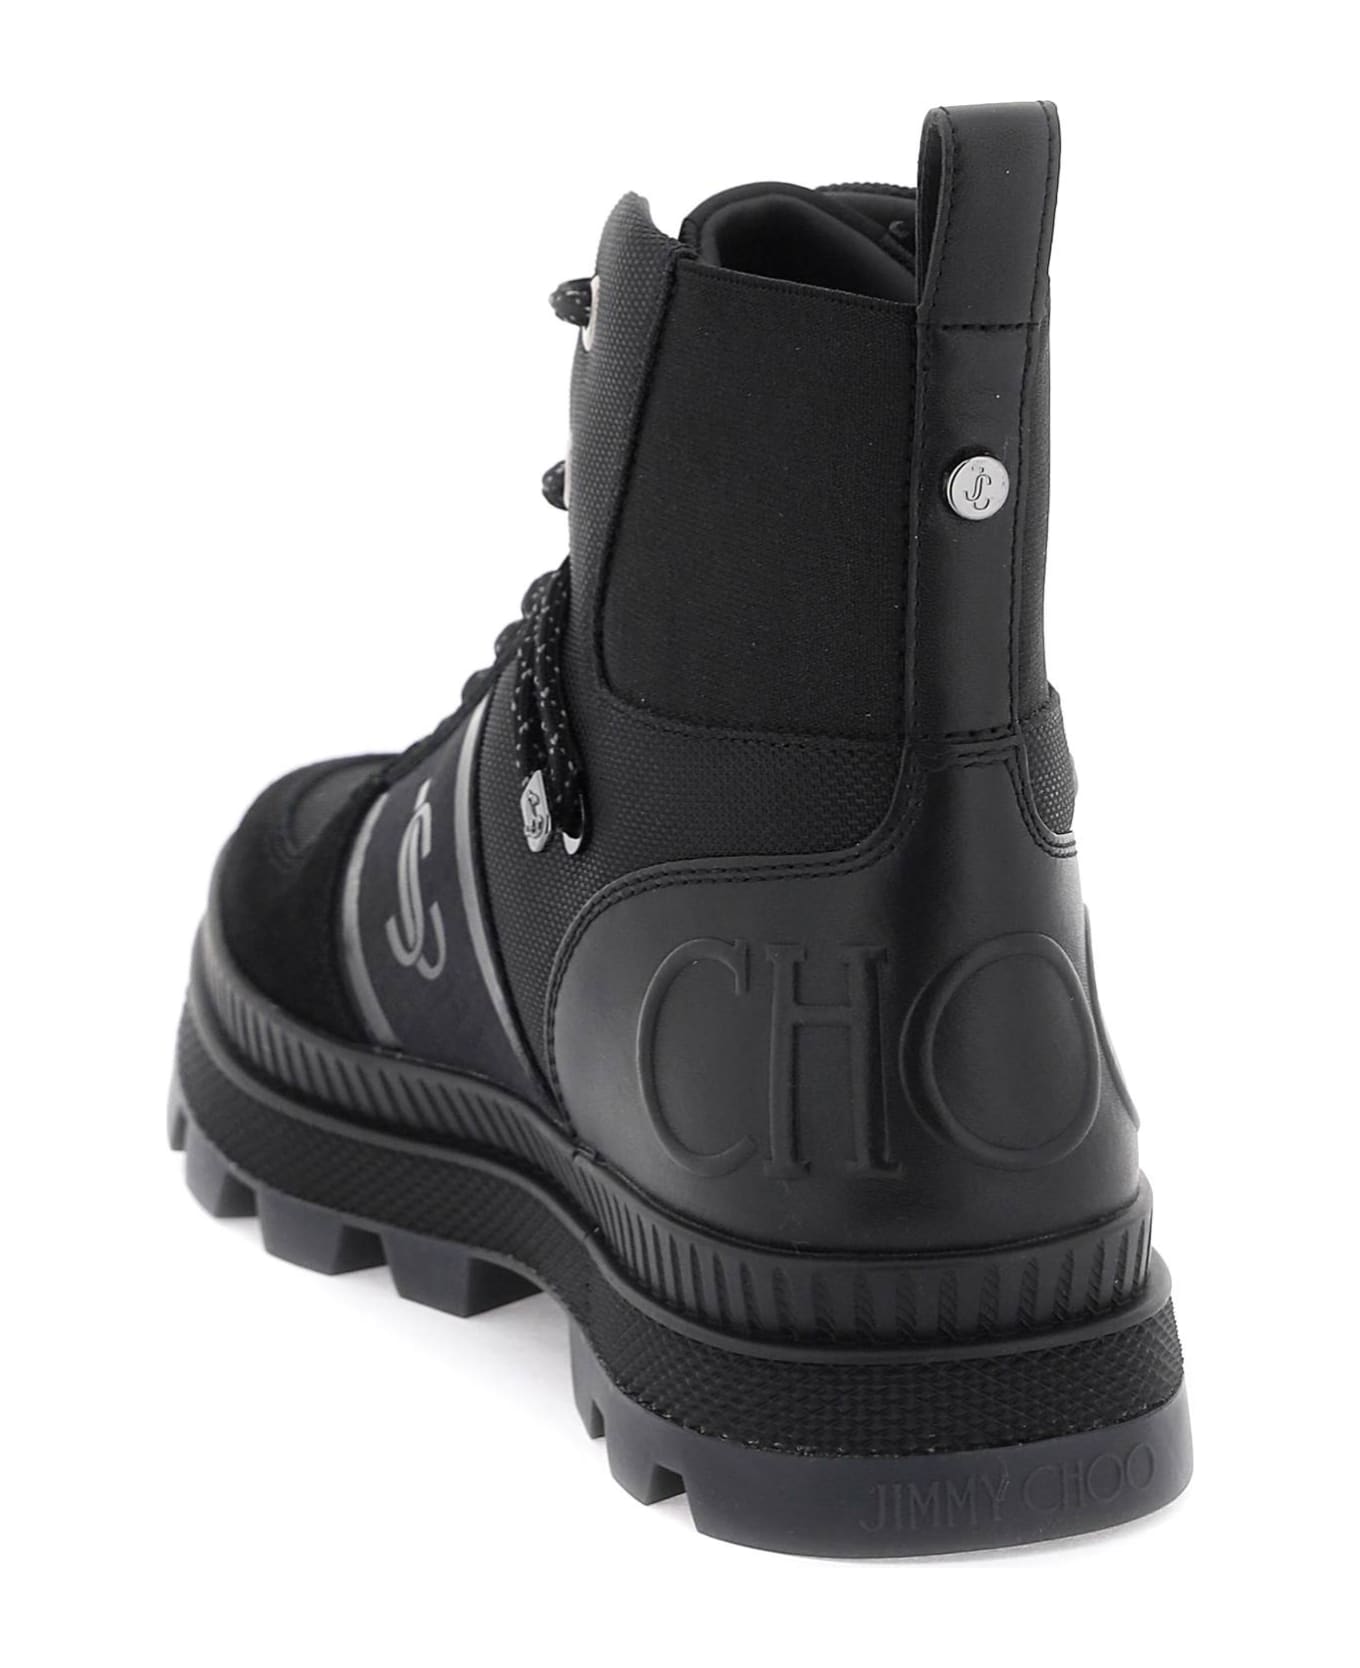 Jimmy Choo 'normandy' Ankle Boots - X BLACK MIX (Black) ブーツ